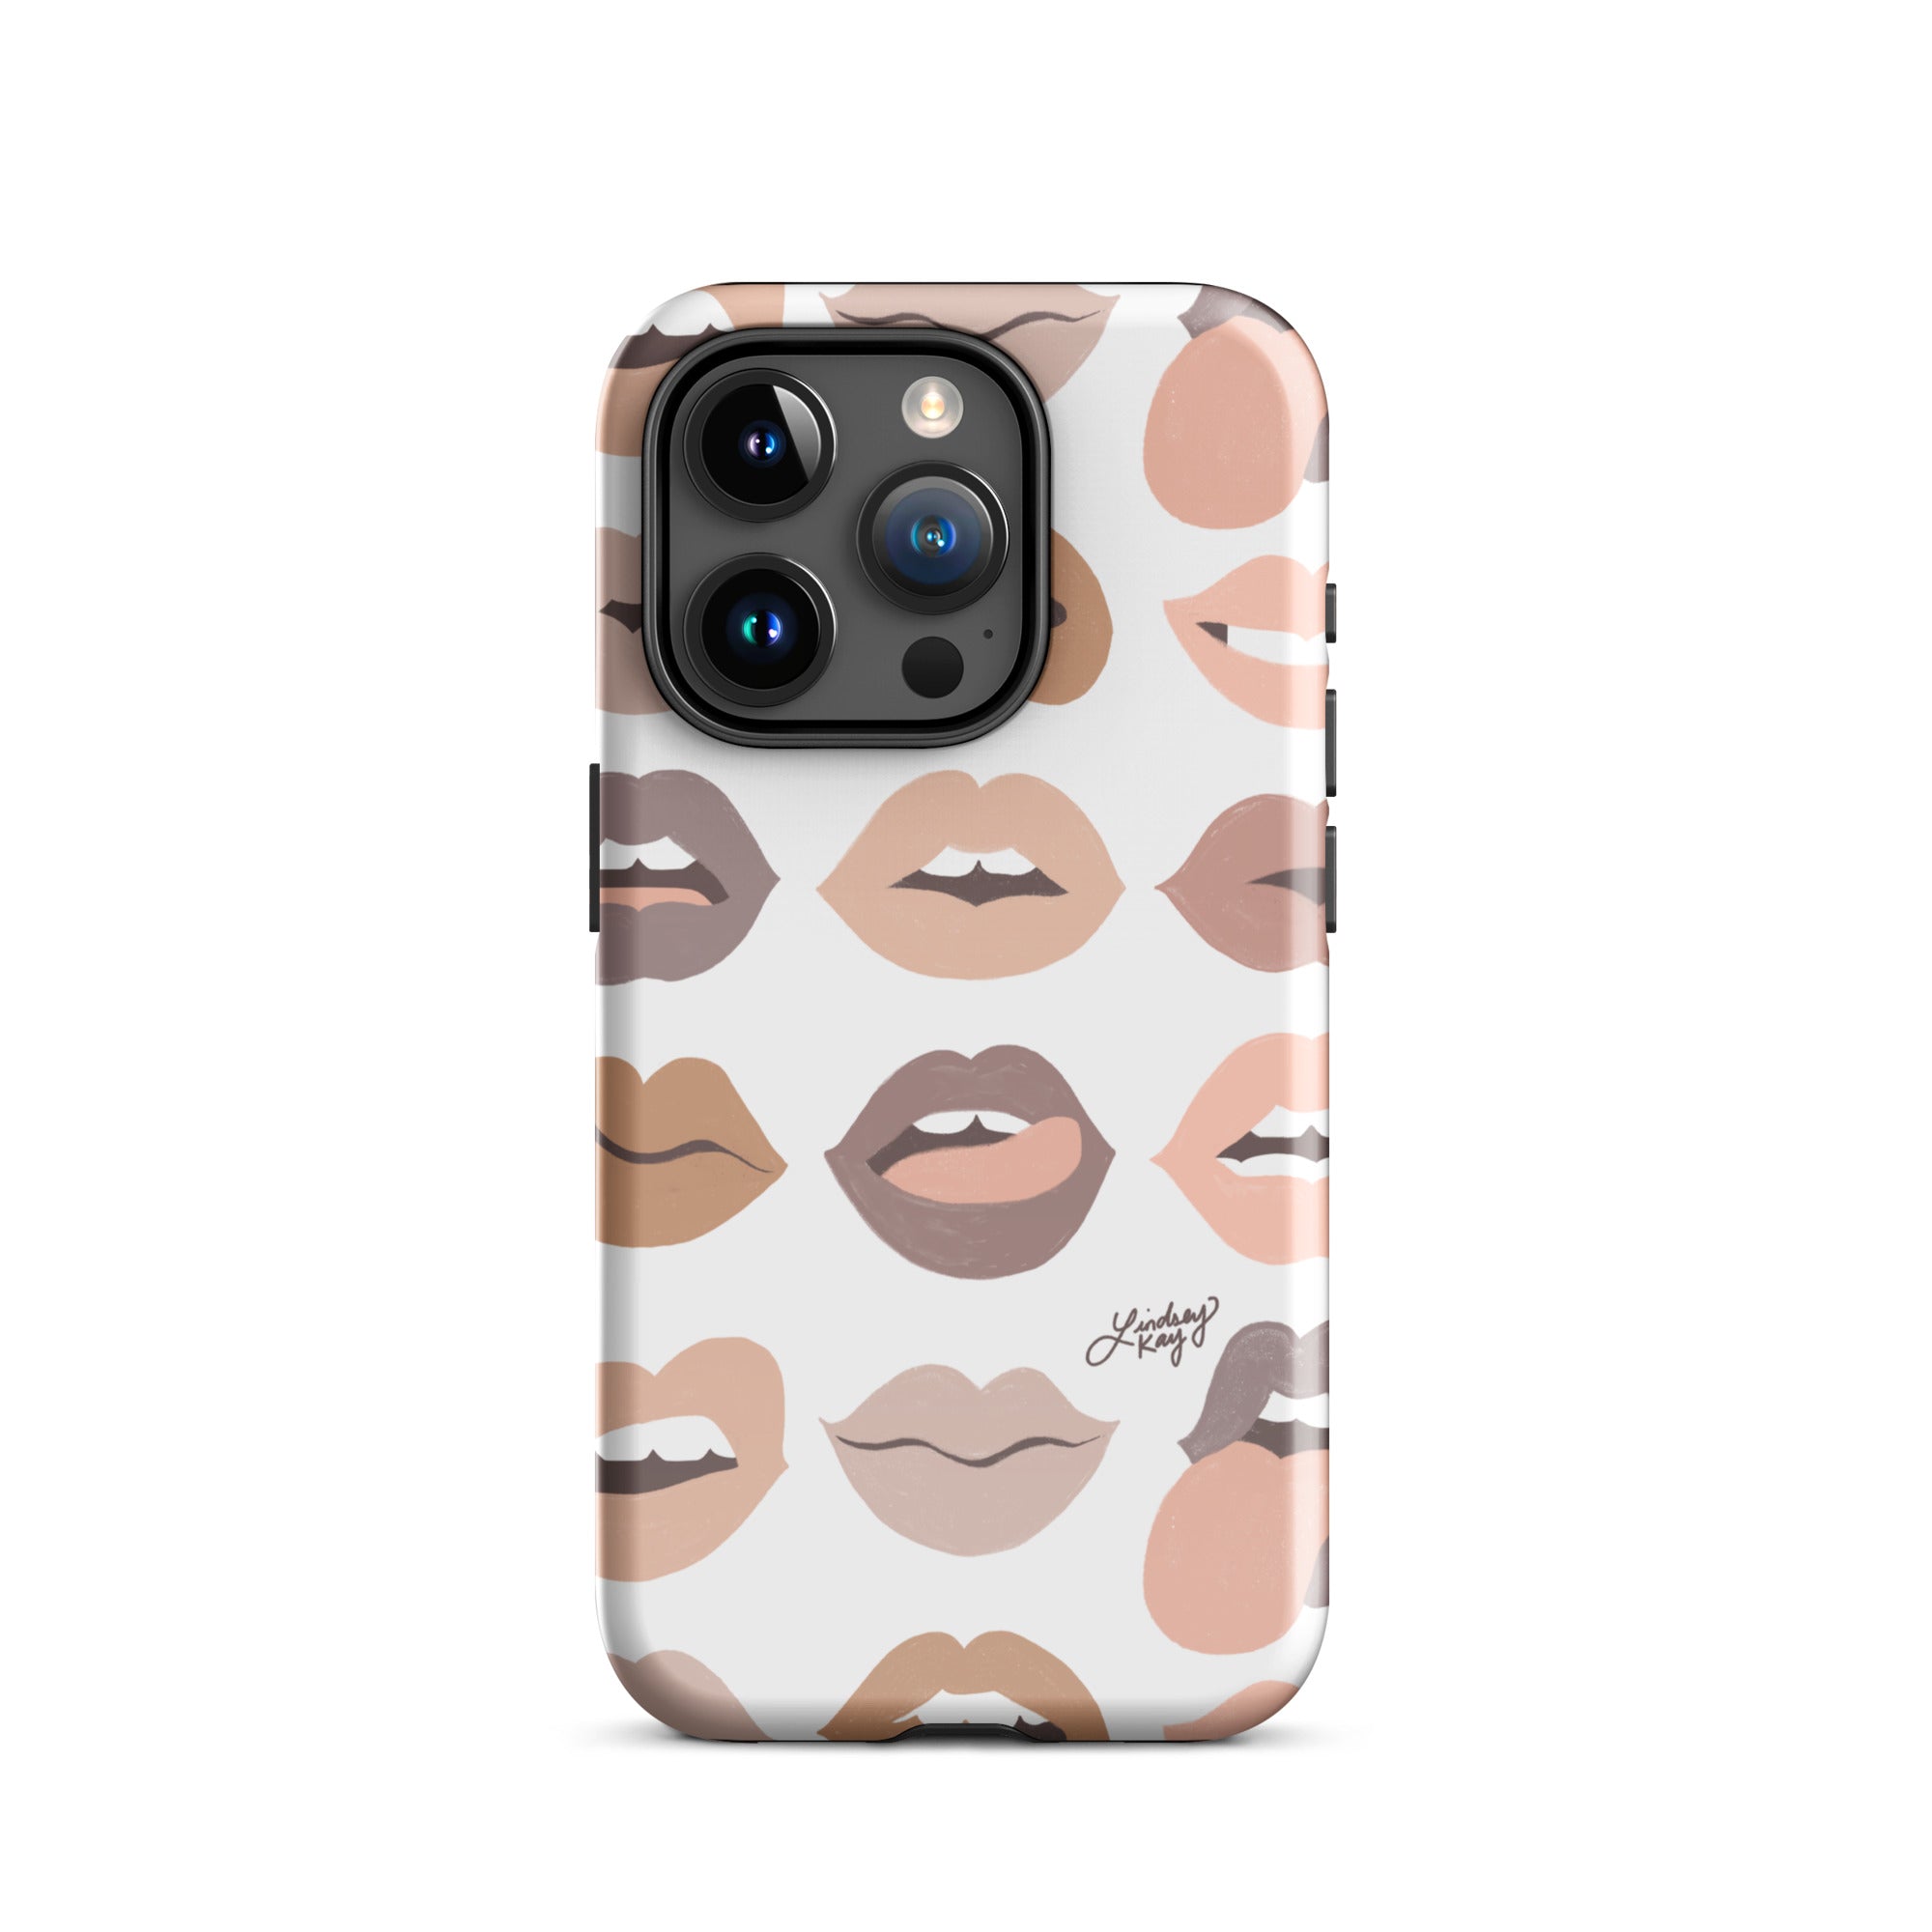 Labios neutros de amor - Funda resistente para iPhone®